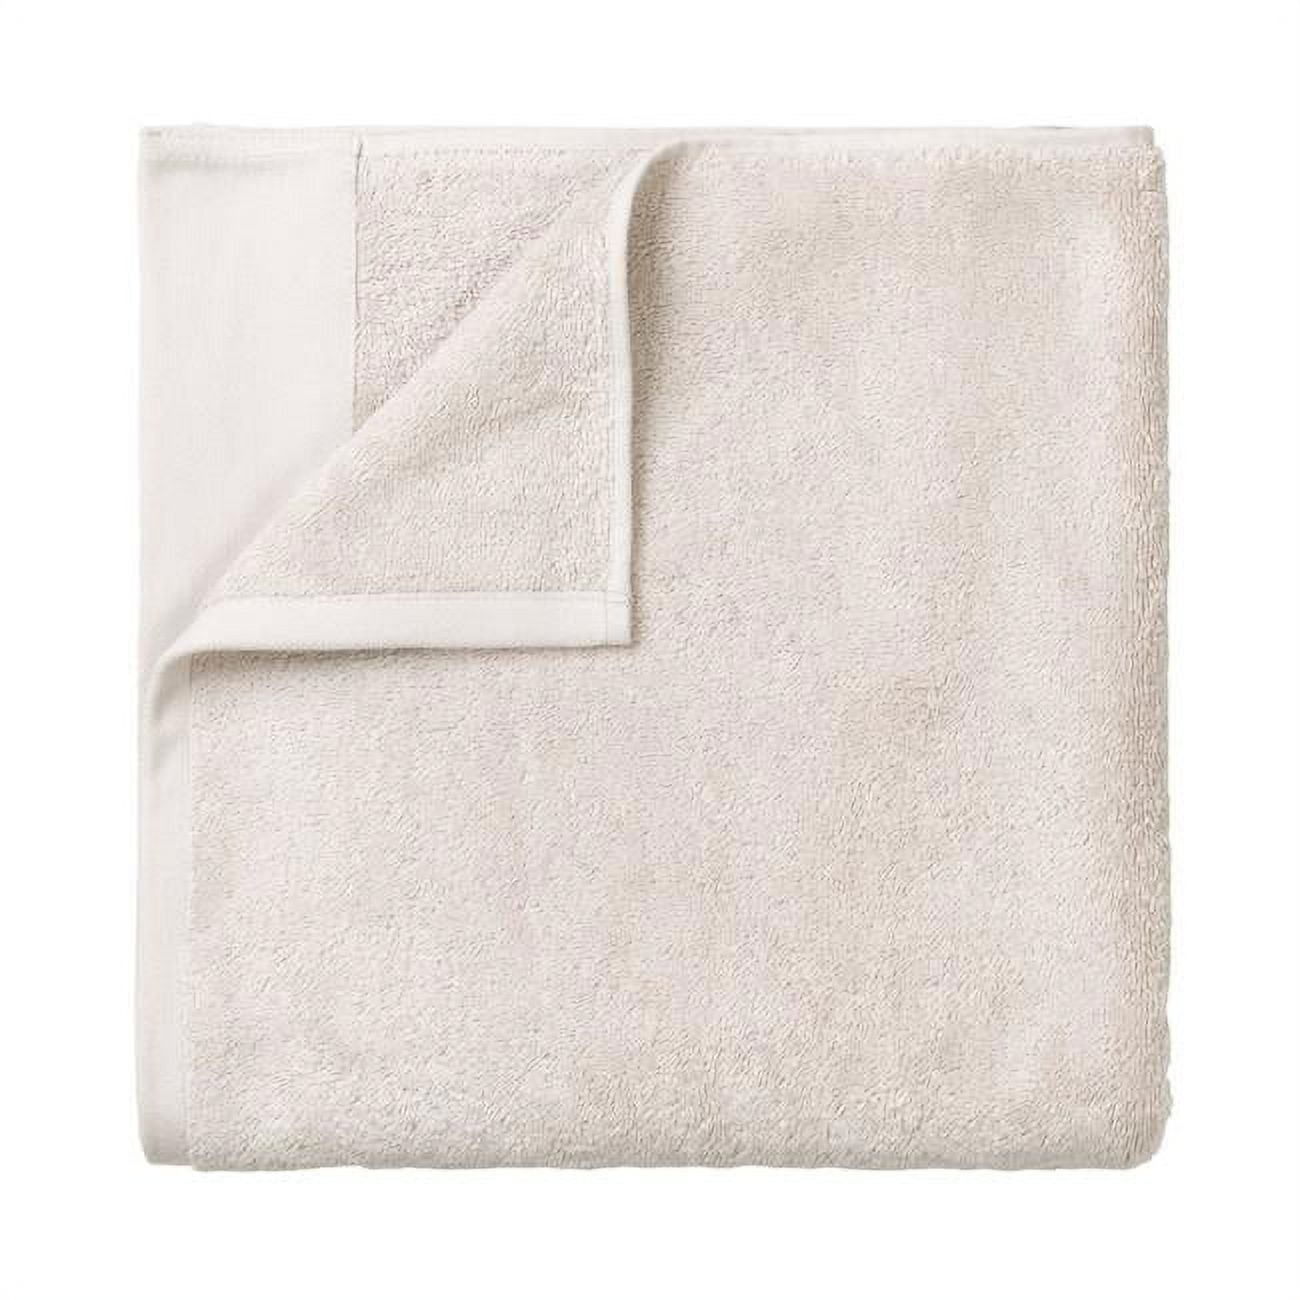 69120 28 X 55 In. Riva Organic Terry Cloth Bath Towel, Moonbeam